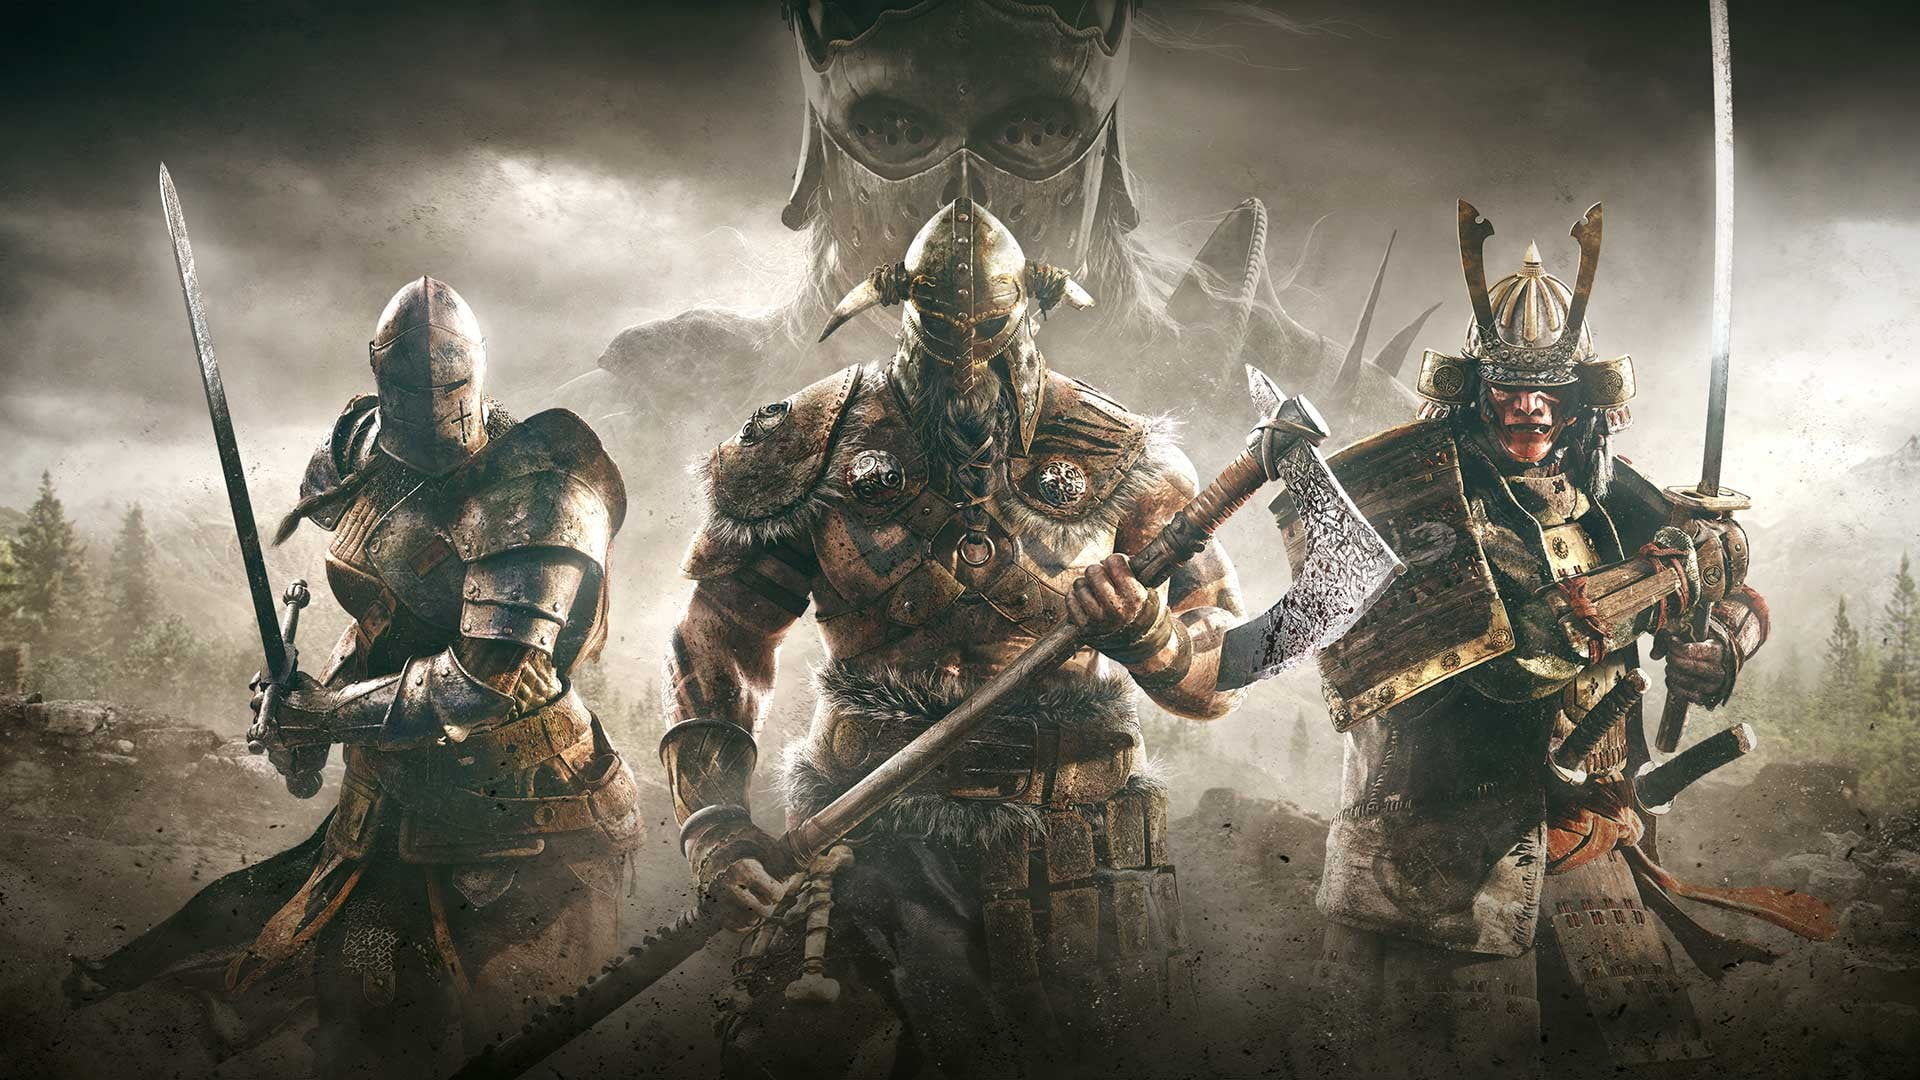 warrior game poster, For Honor, video games, Vikings, samurai